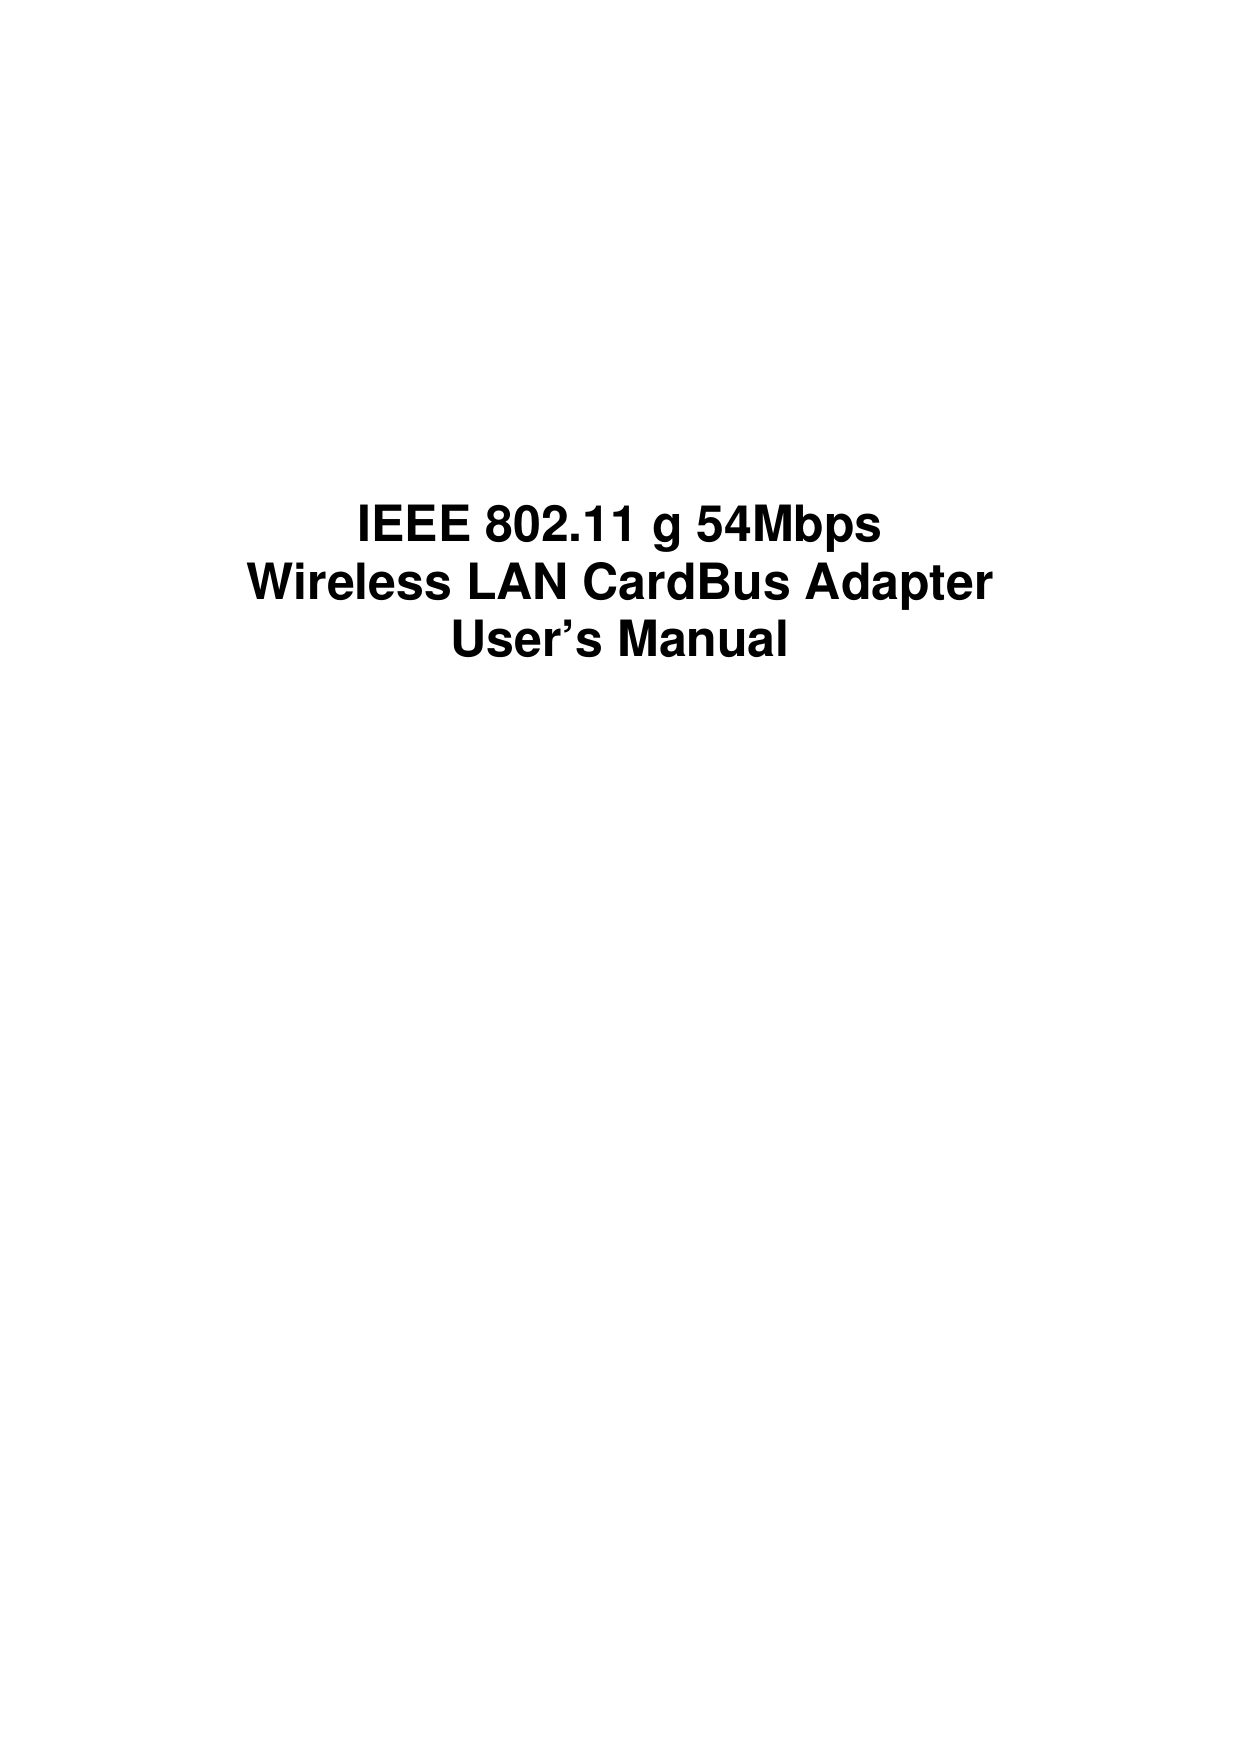       IEEE 802.11 g 54Mbps Wireless LAN CardBus Adapter User’s Manual 